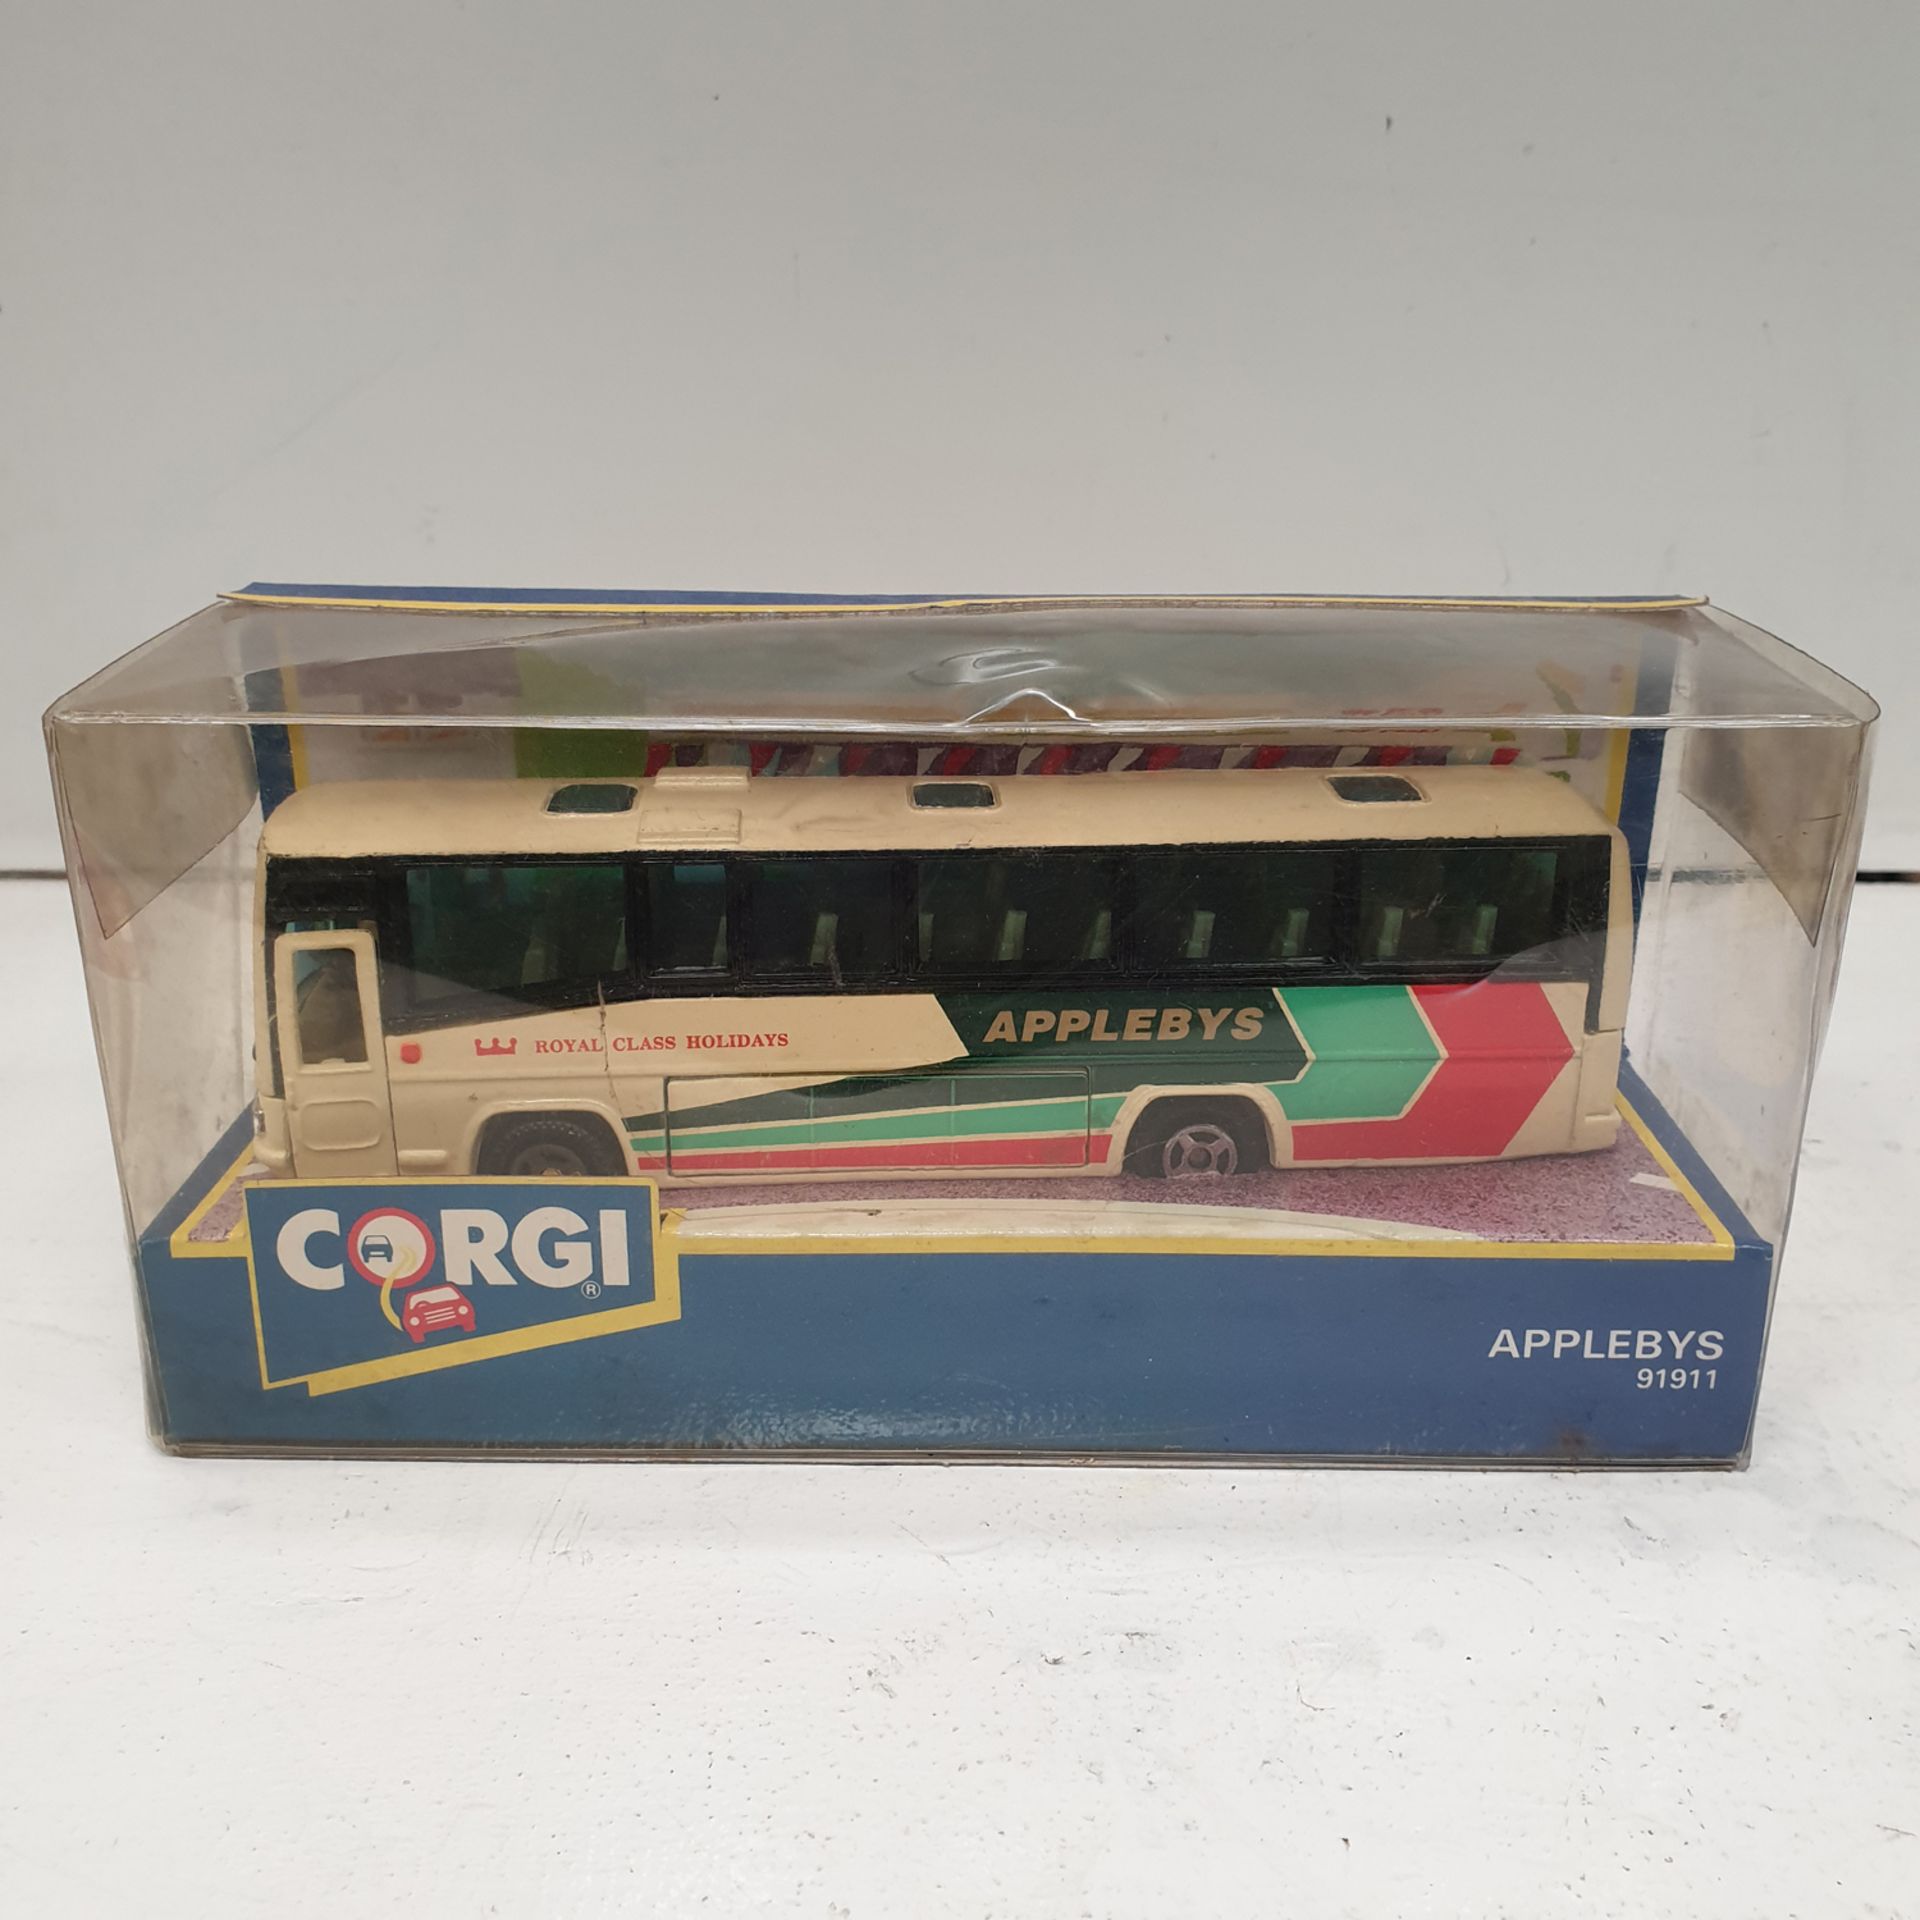 Corgi Model 91911 'Royal Class Holidays' Appleby's Coach Model.